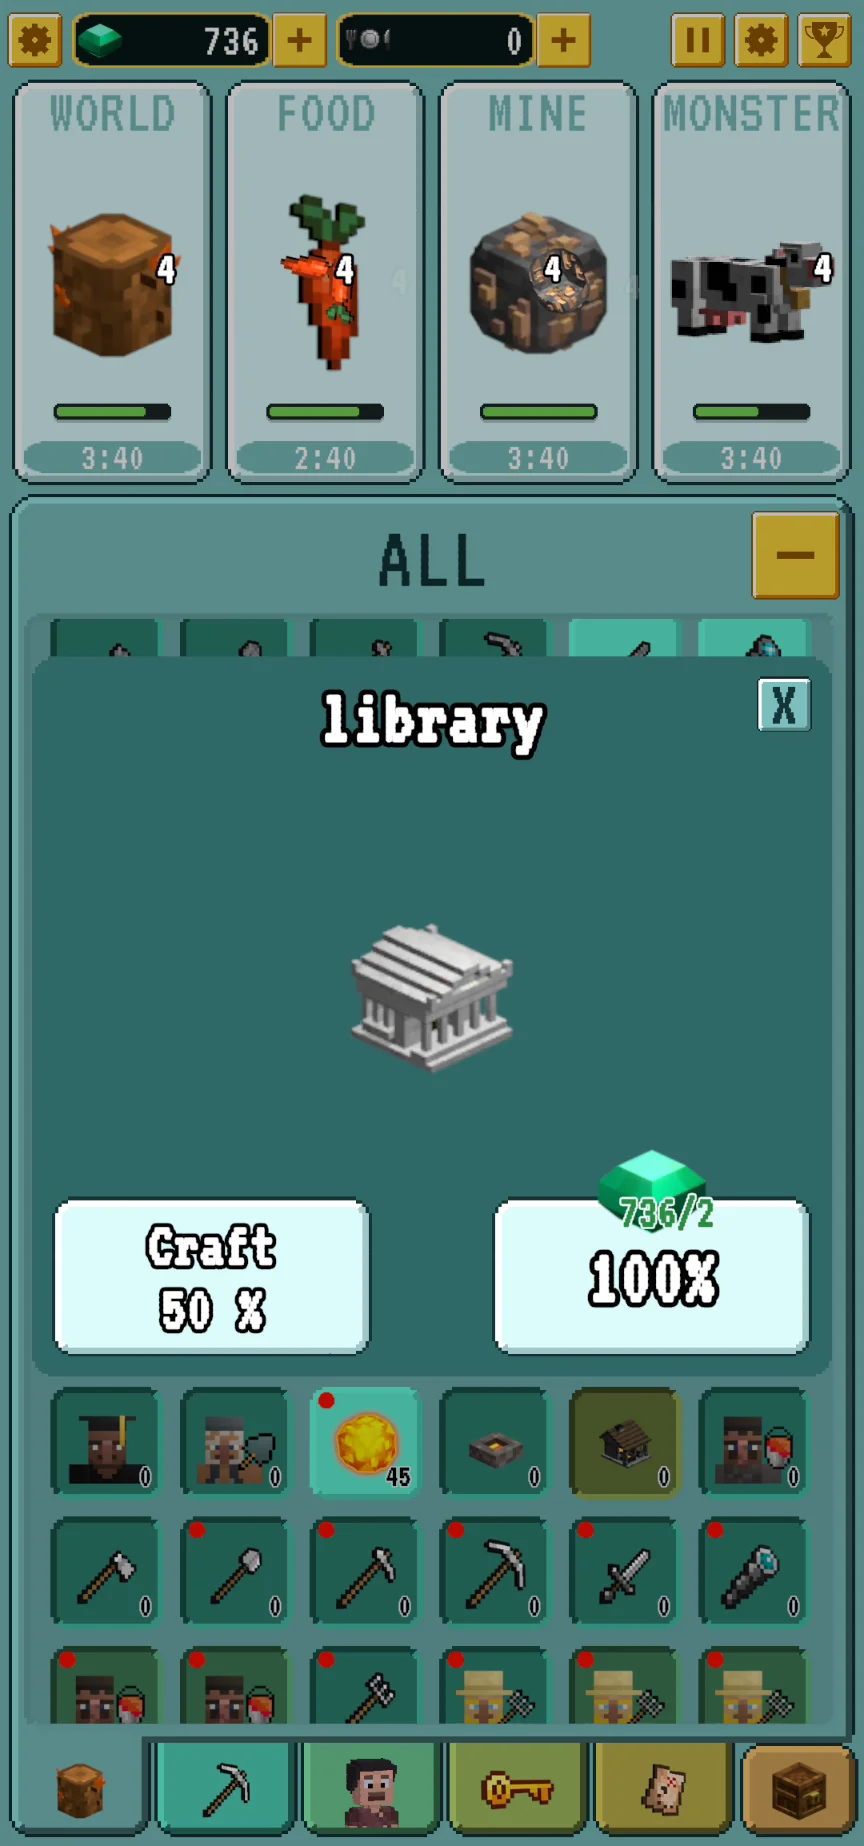 Grindcraft Screenshot of Crafting Library